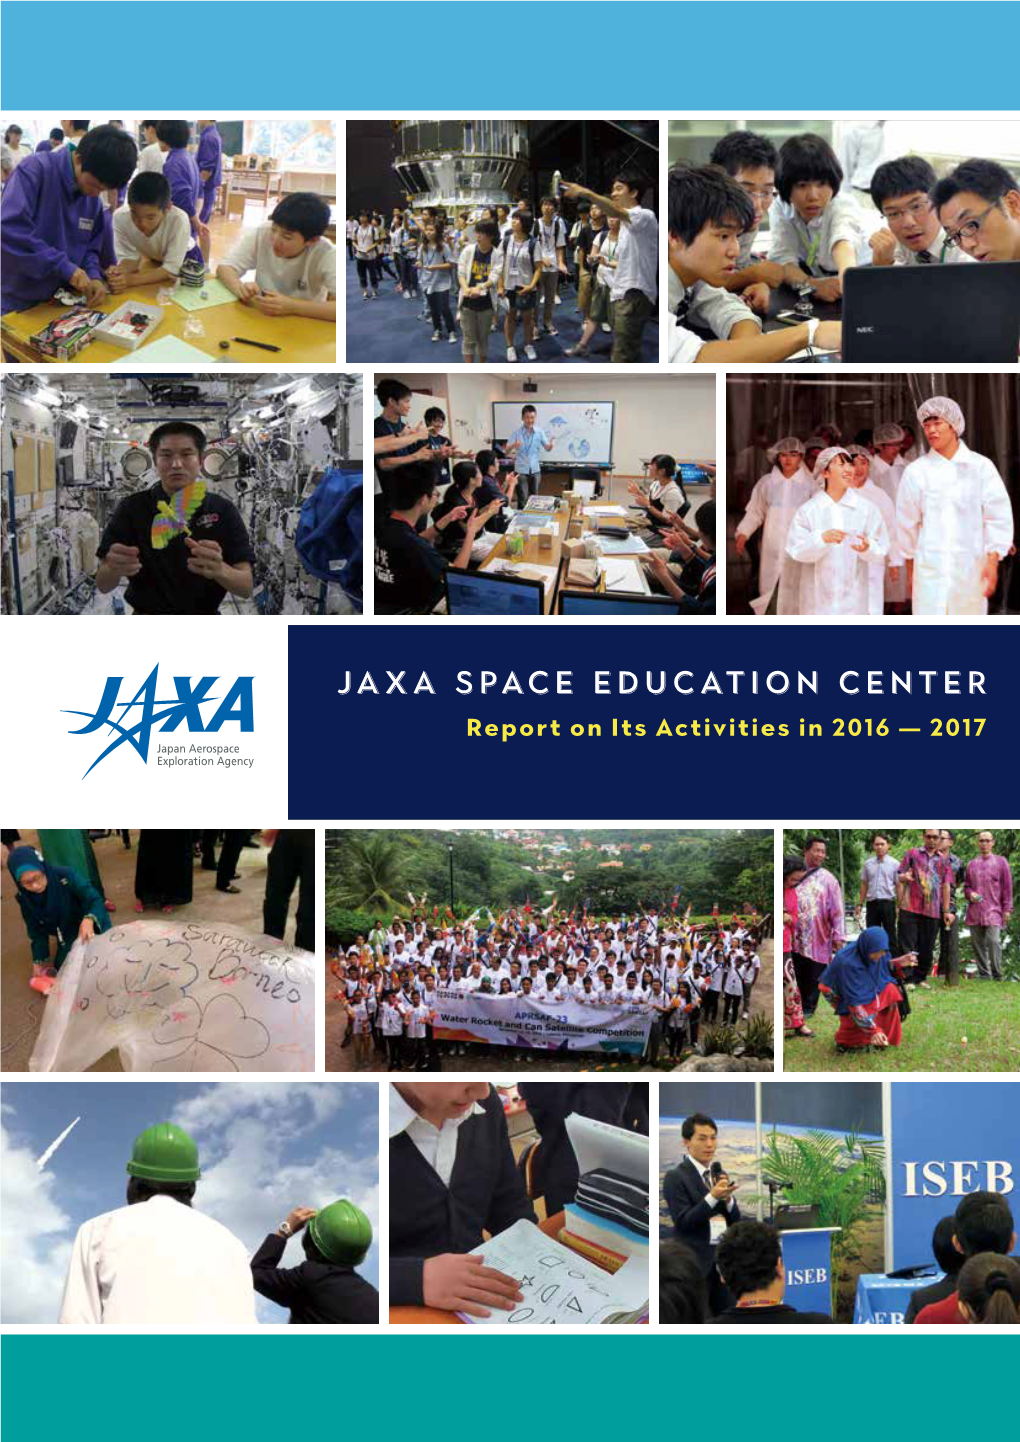 JAXA Space Education Center